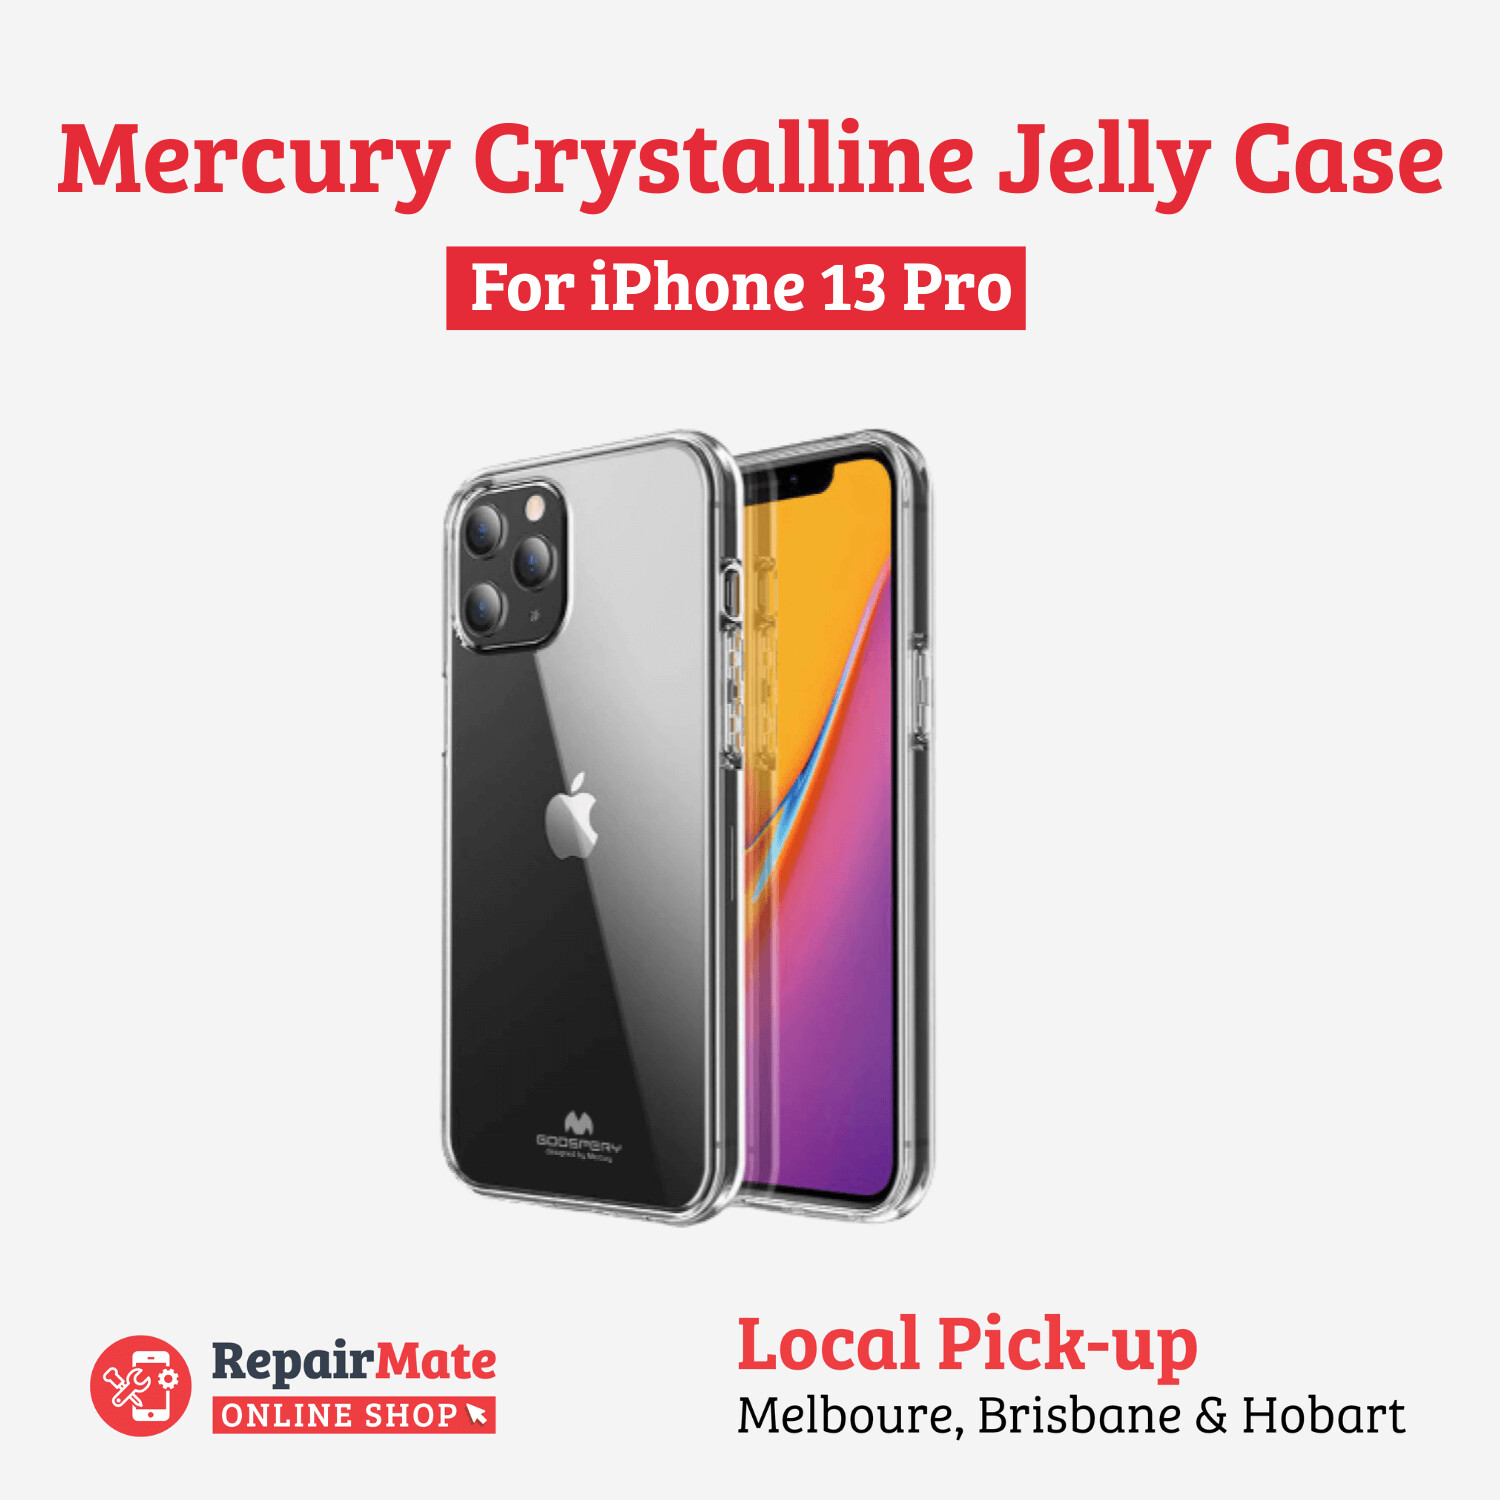 iPhone 13 Pro Mercury Crystalline Jelly Case Cover